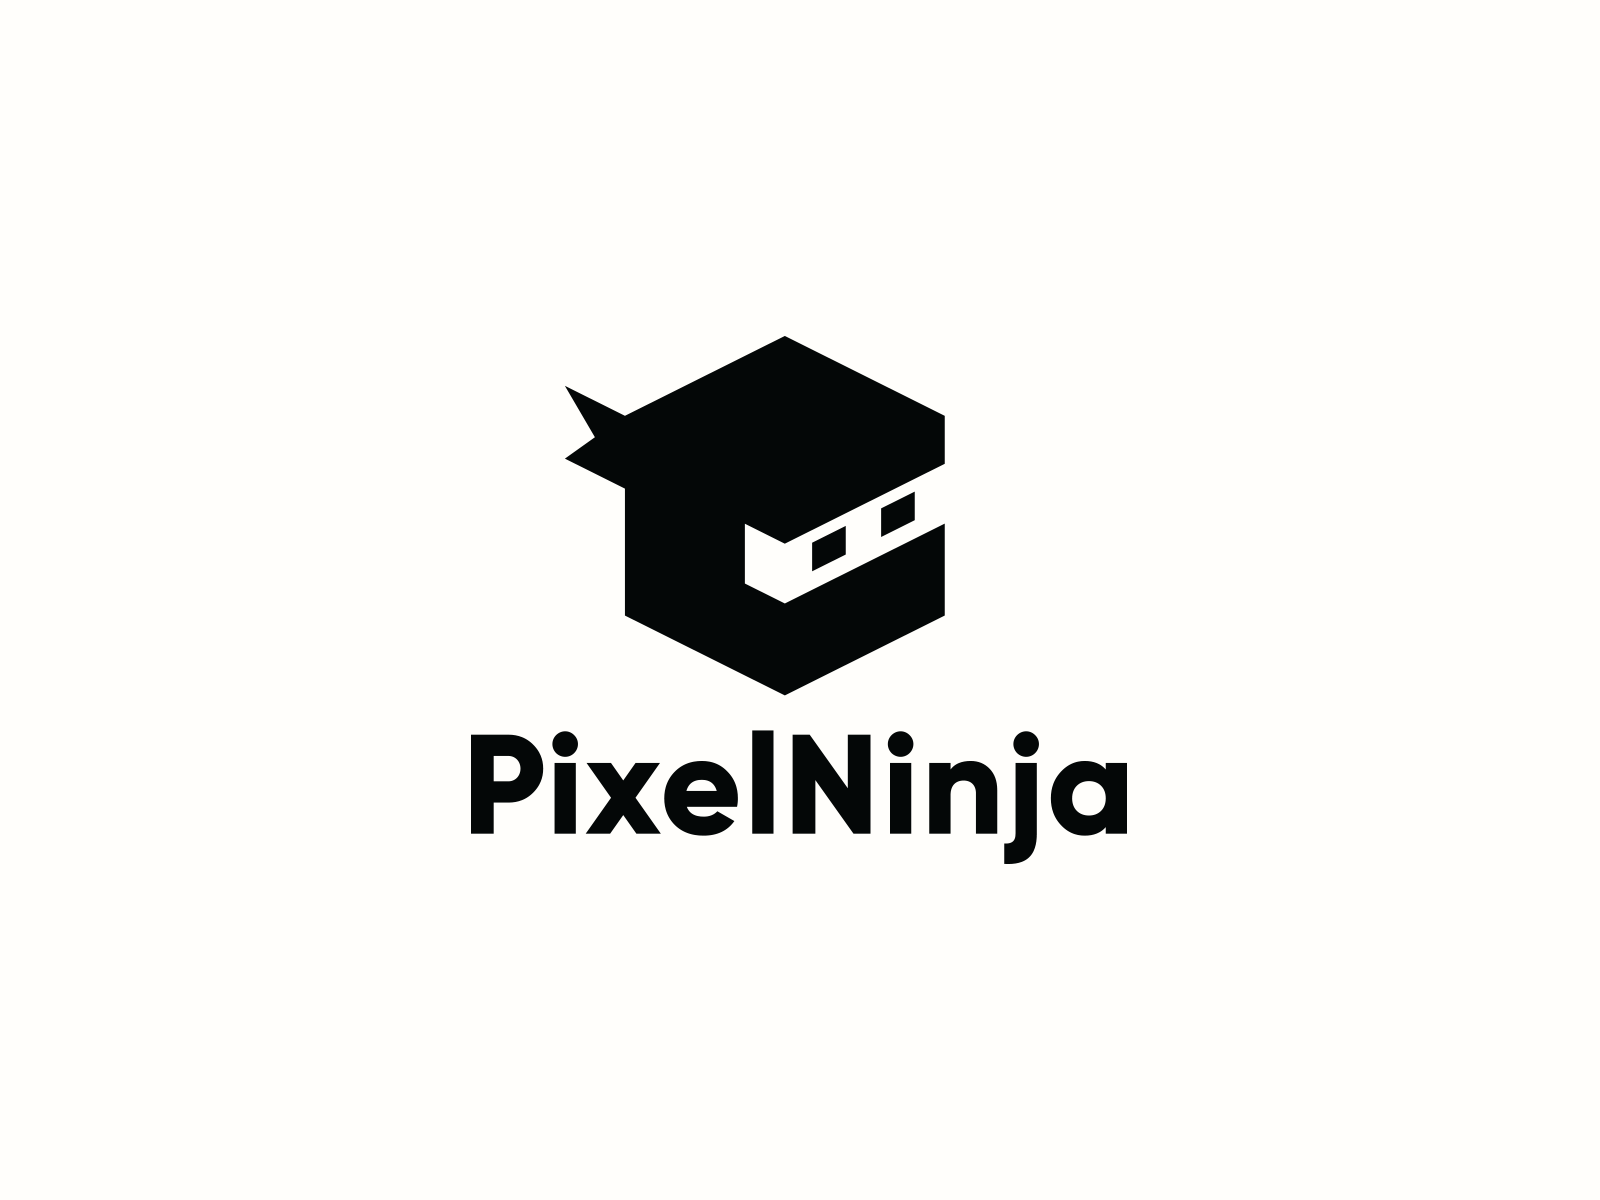 Ninja Cash by Omega-Pixel on Dribbble